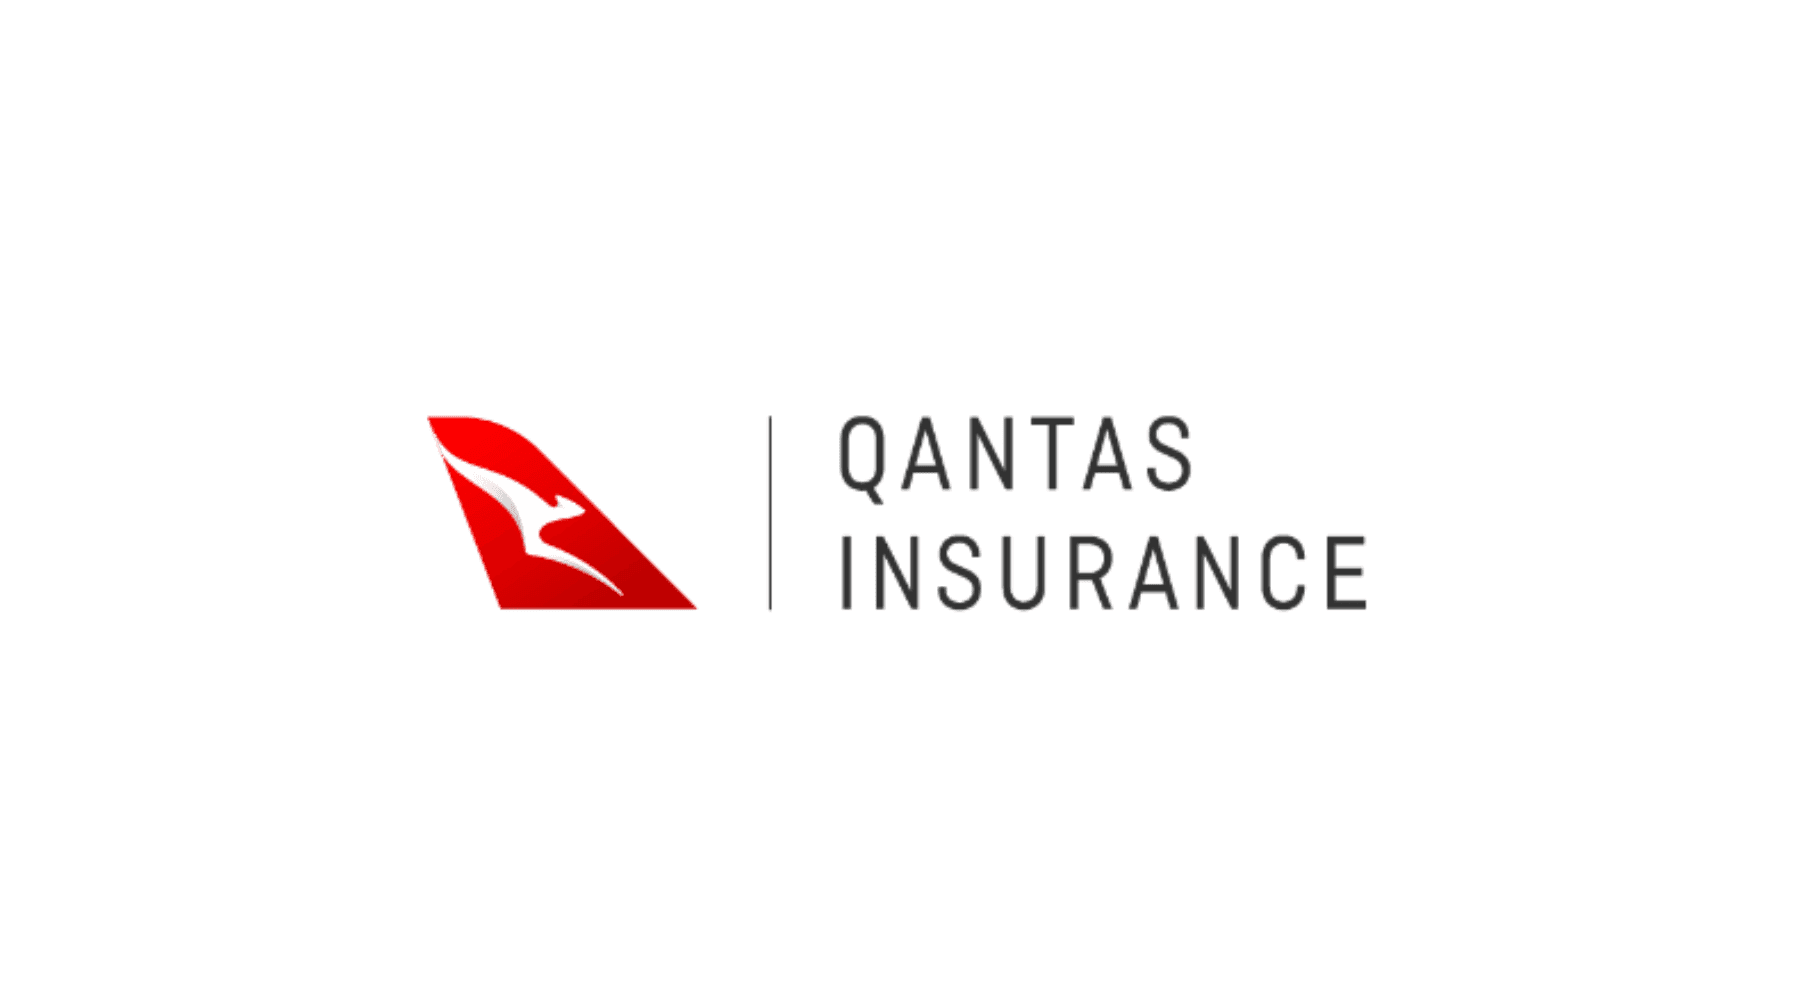 qantas travel insurance missed ports